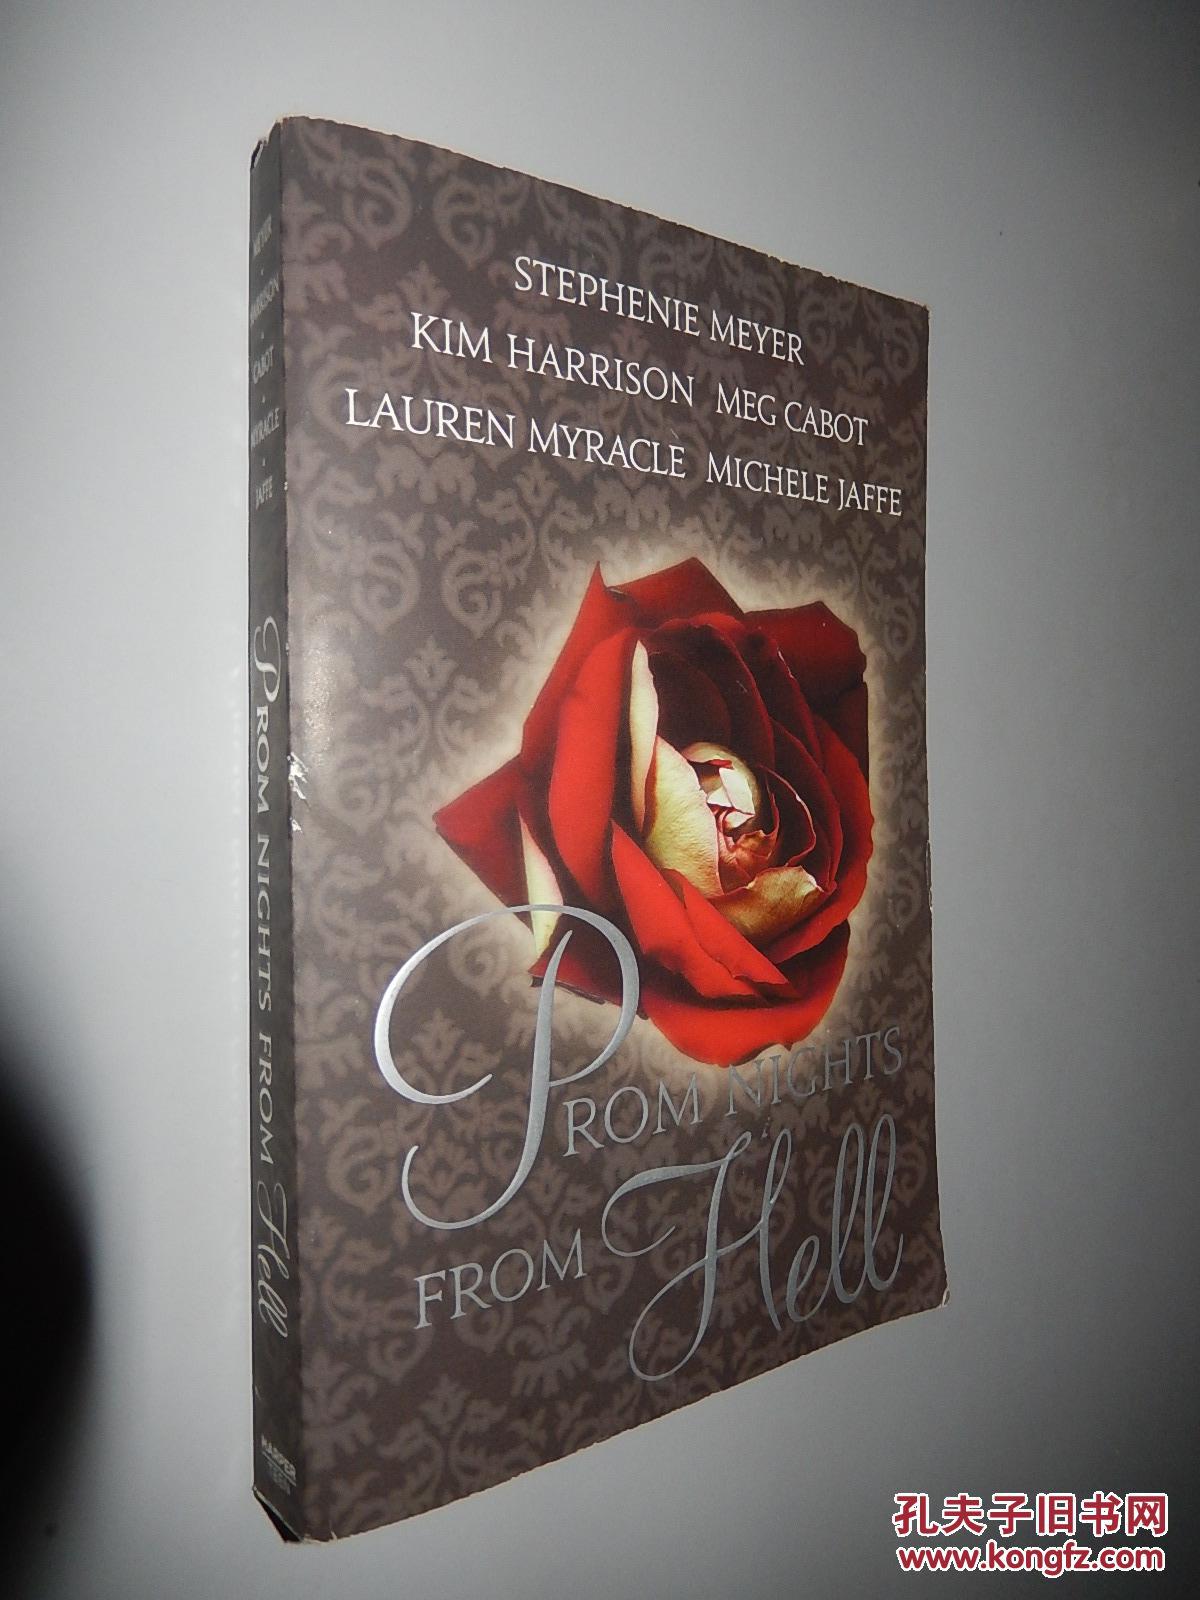 Prom Nights from Hell by Stephenie Meyer 英文原版 正版